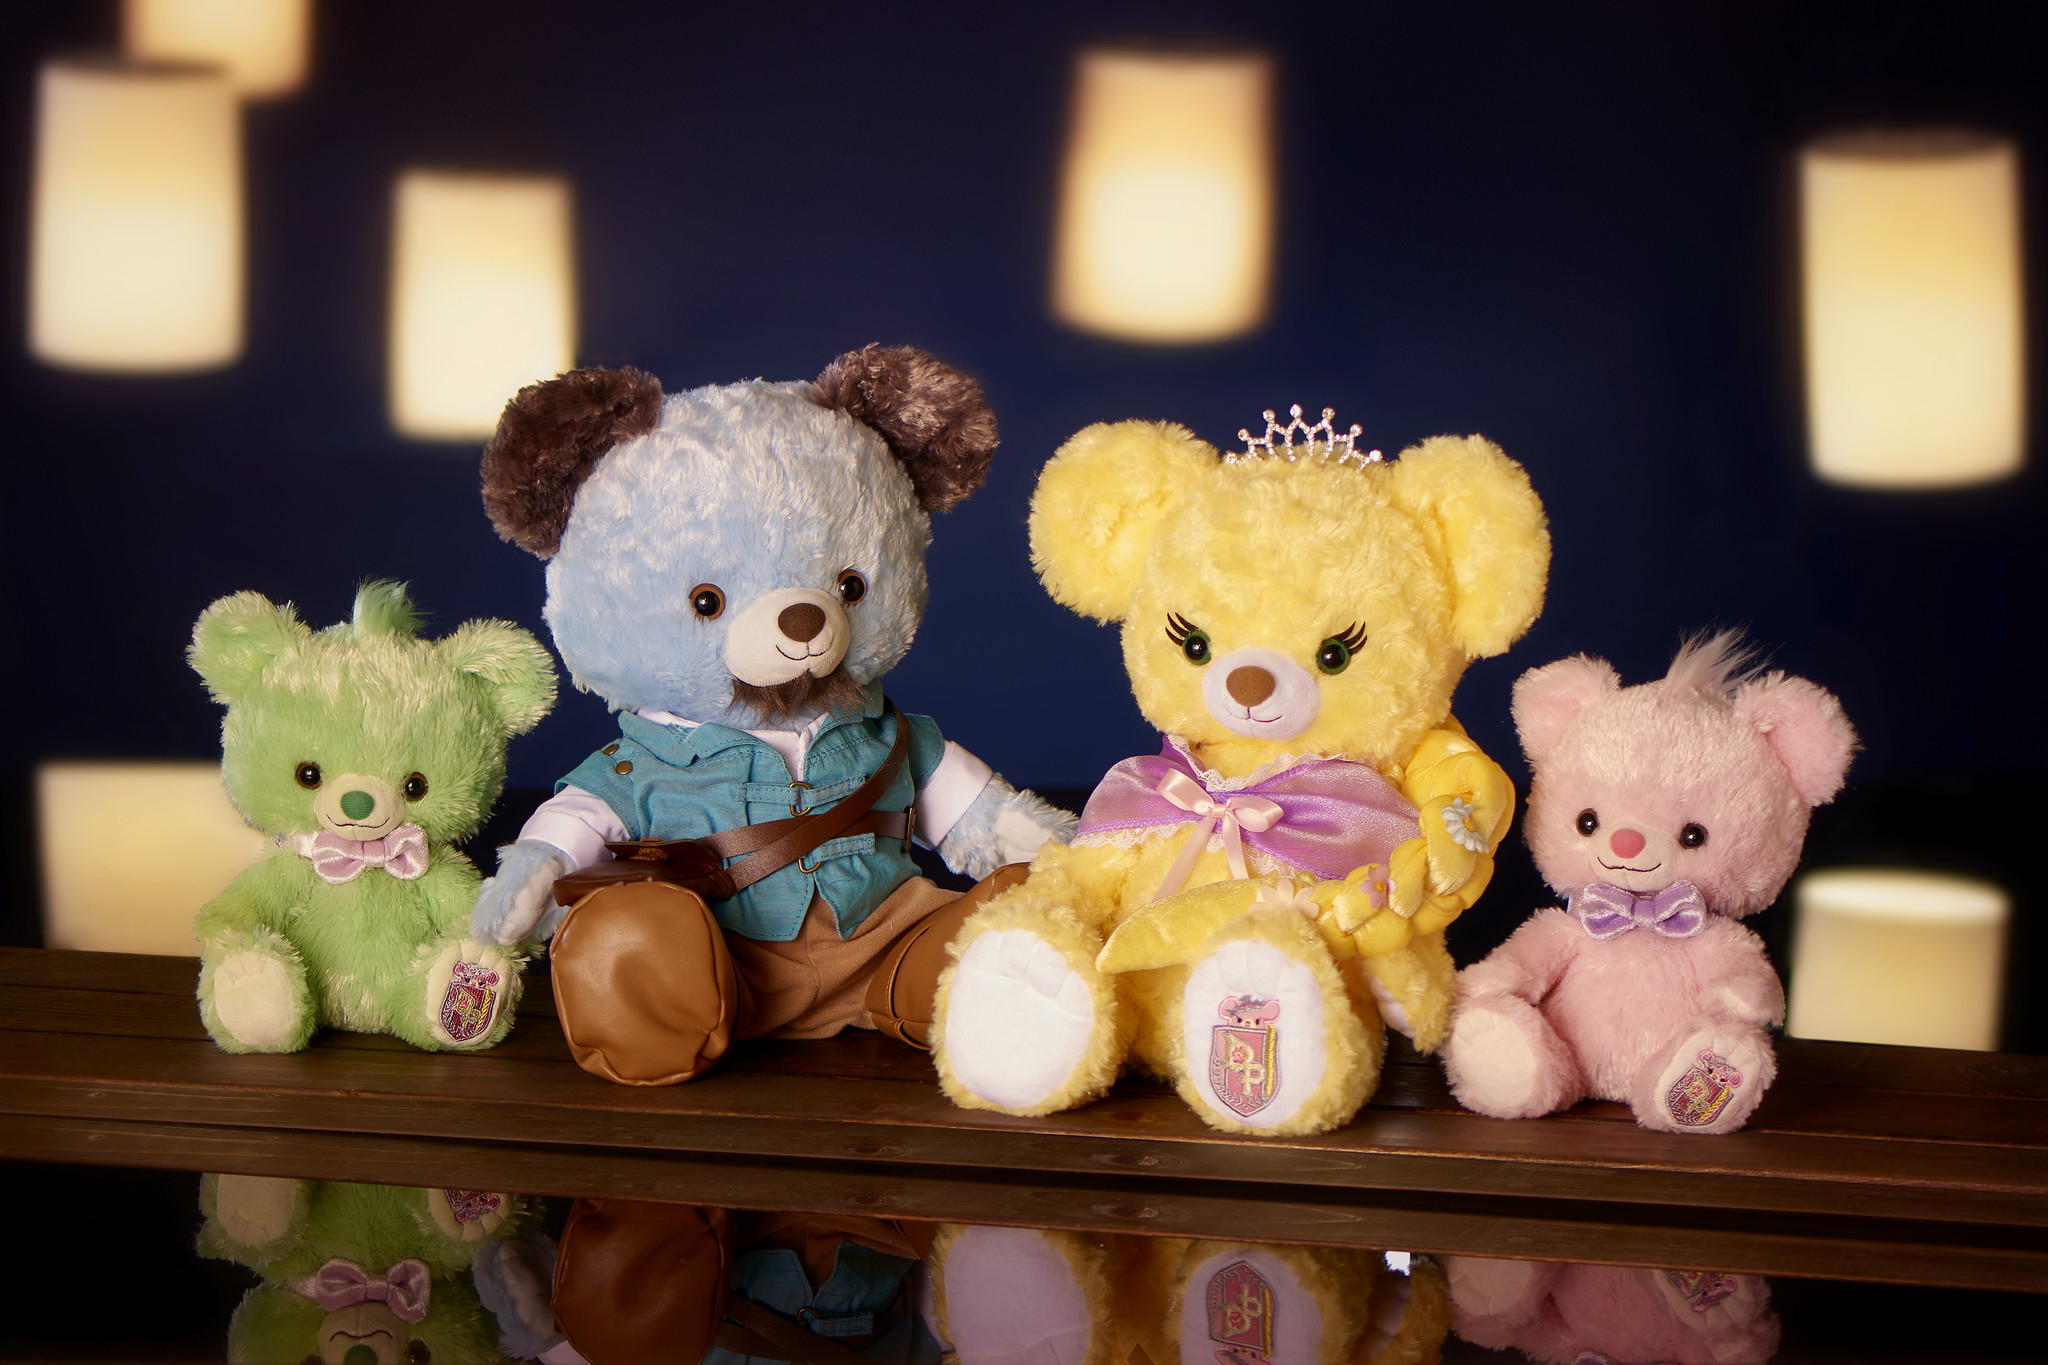 Disney Princess Bear By Unibearsity より映画 塔の上のラプンツェル をモチーフにした新シリーズがディズニーストアから11月21日 水 に登場 ウォルト ディズニー ジャパン株式会社のプレスリリース